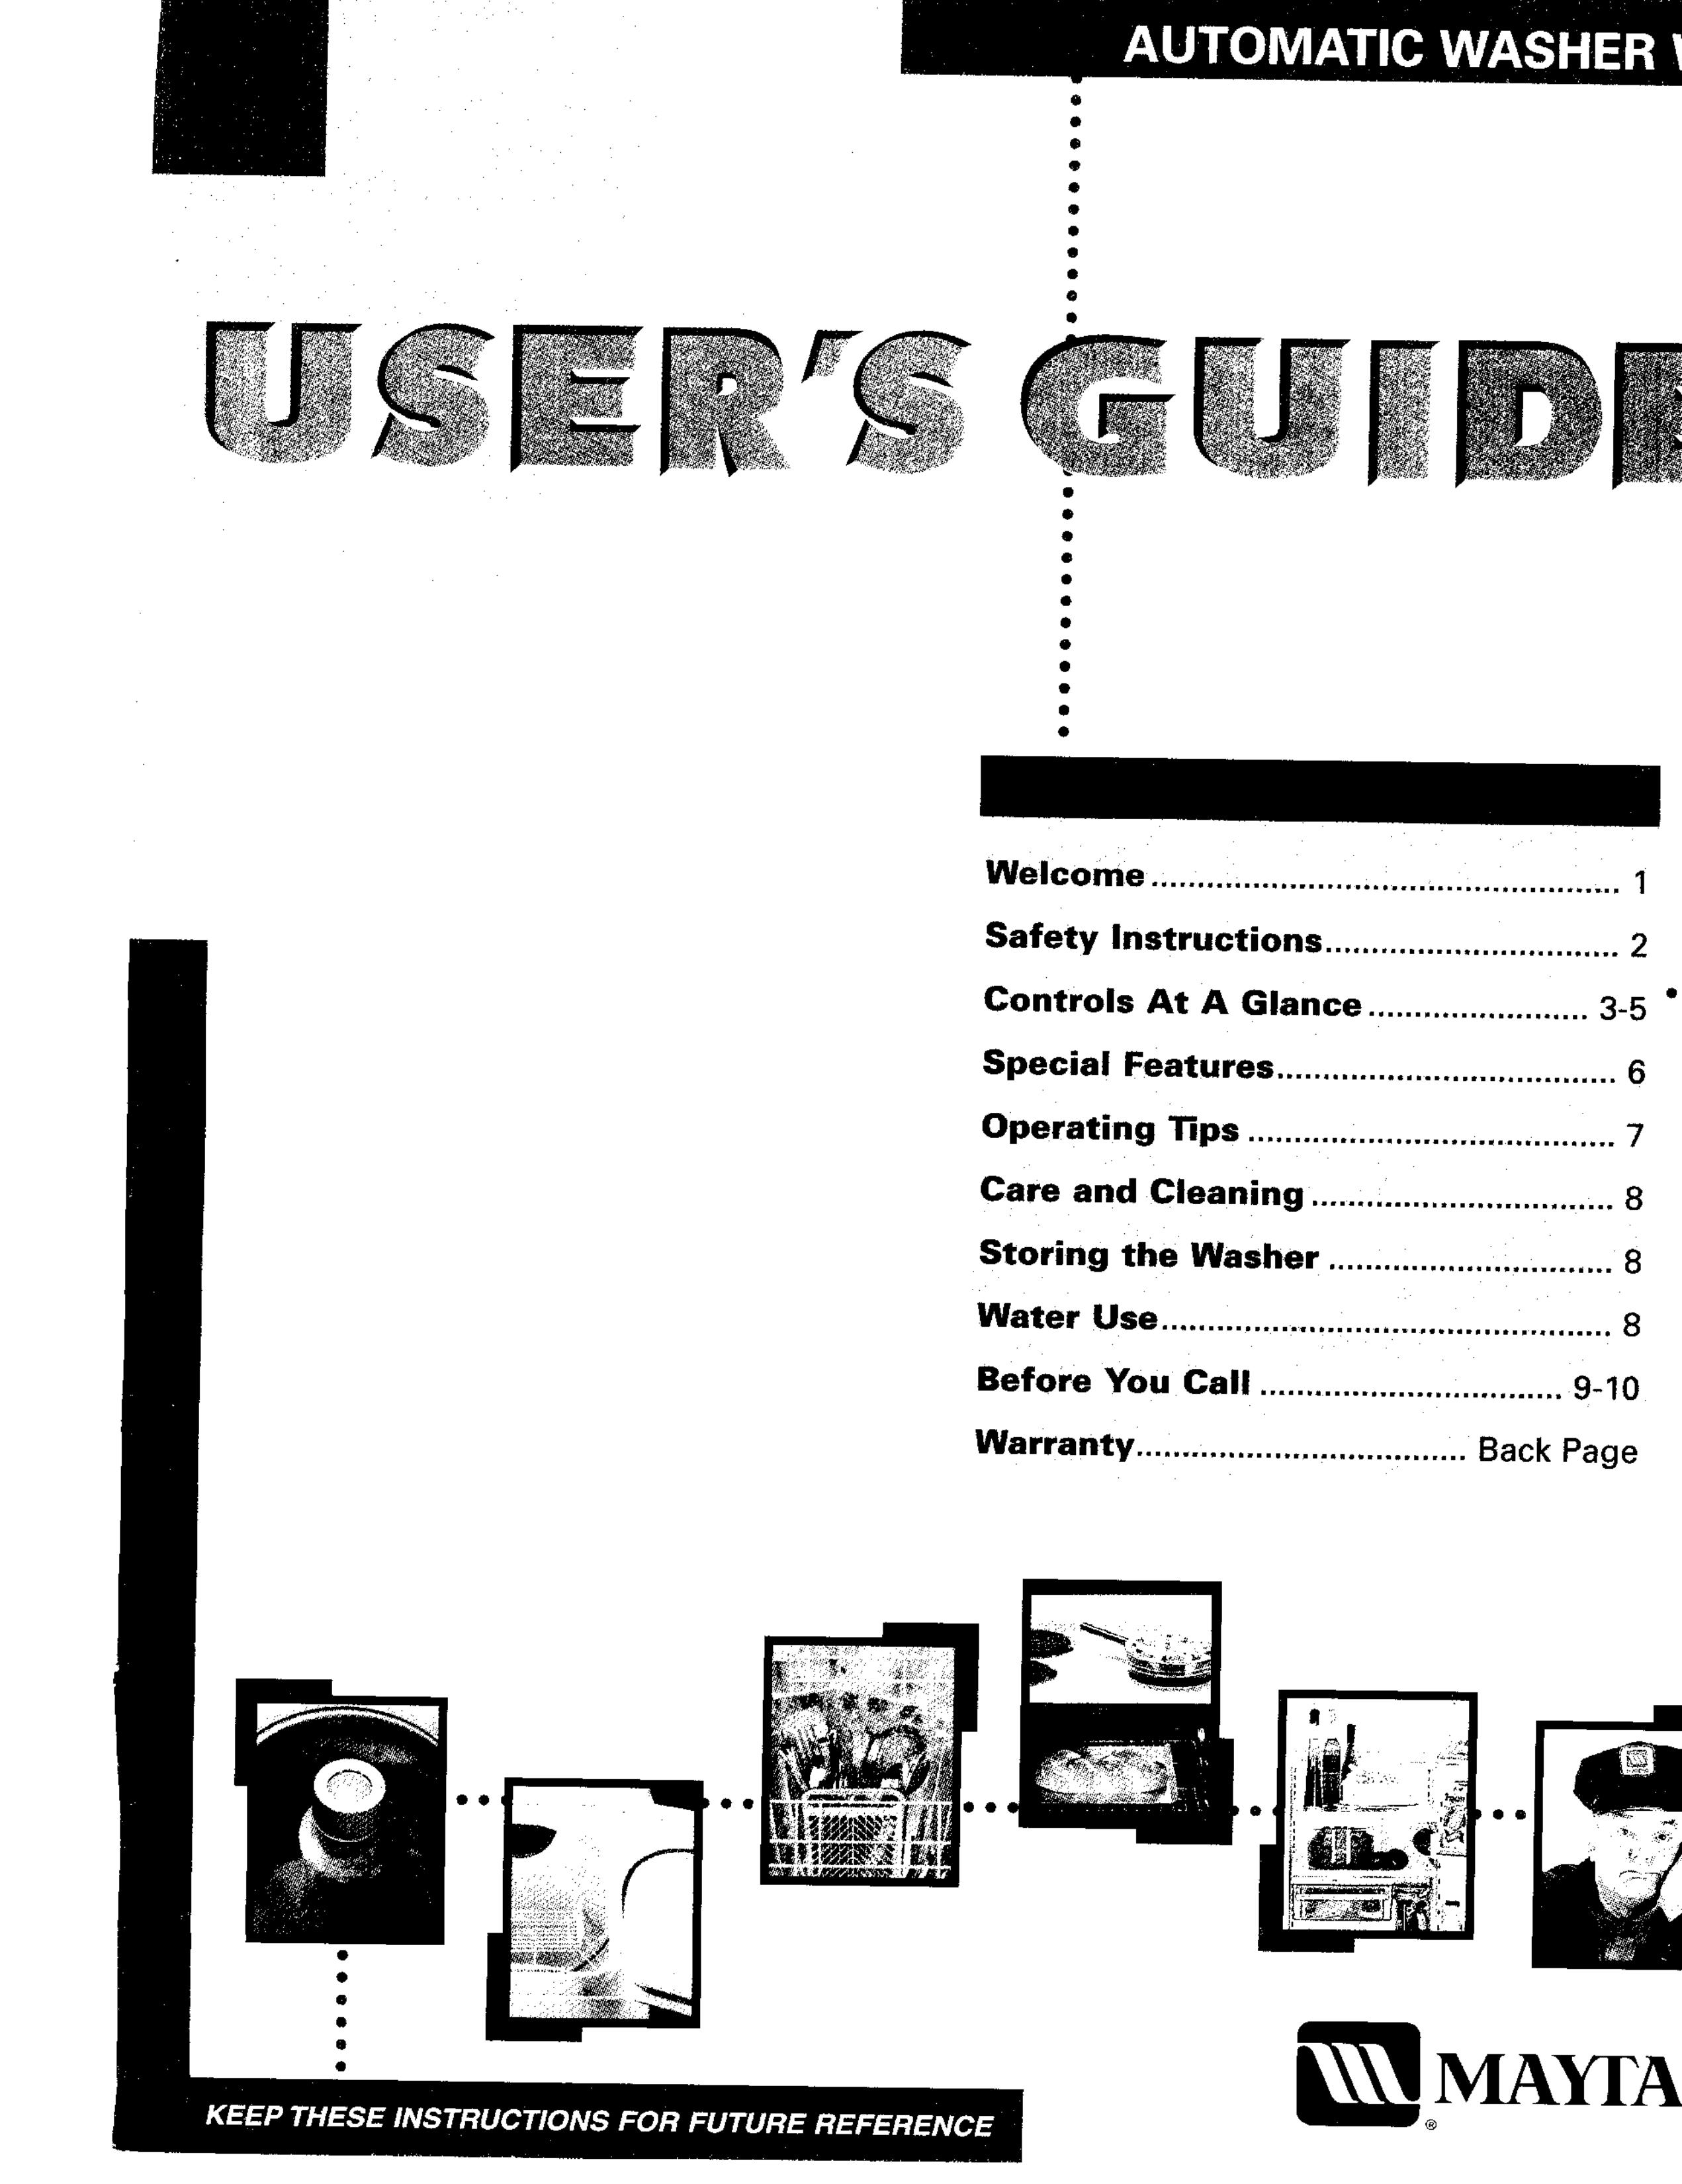 Maytag LAT9757 Washer User Manual